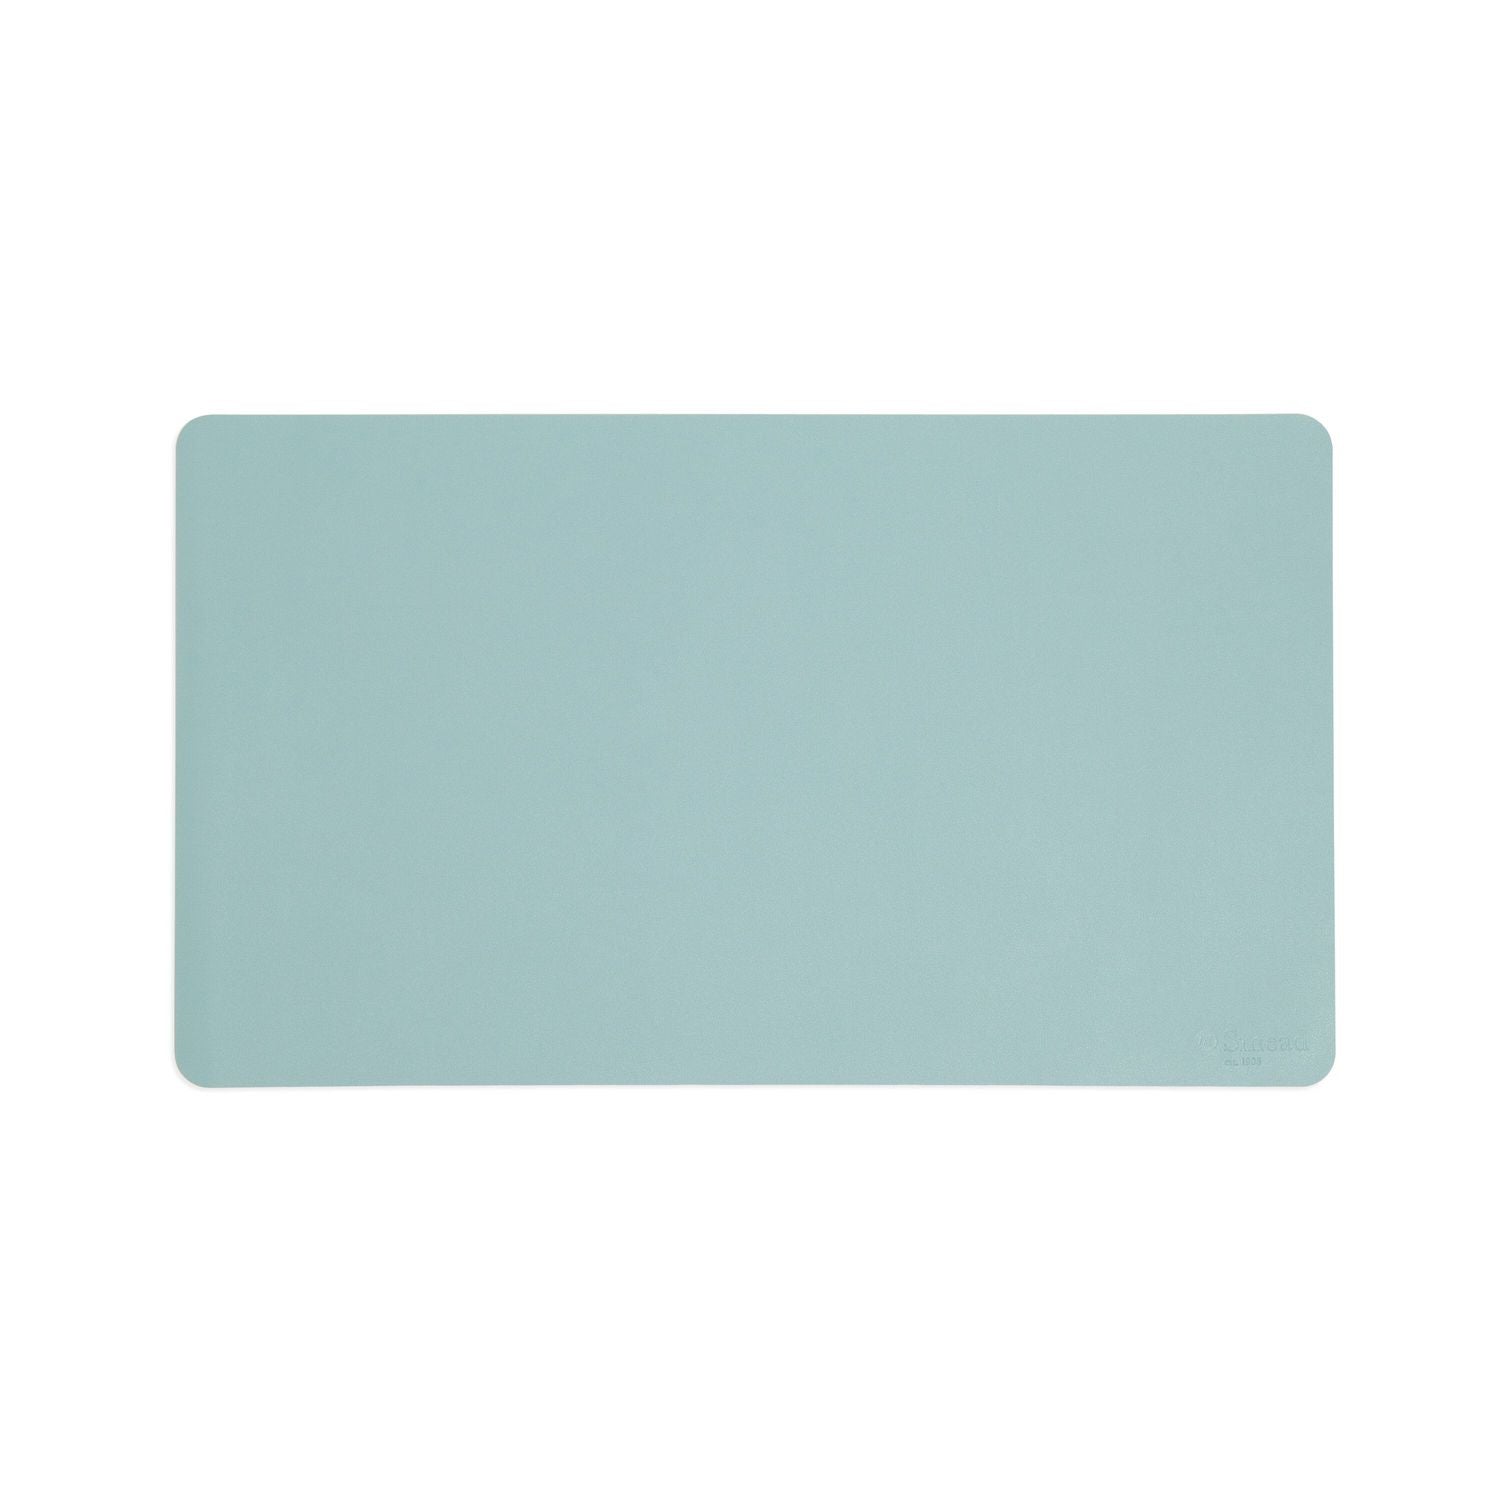 vegan-leather-desk-pads-236-x-137-light-blue_smd64840 - 1